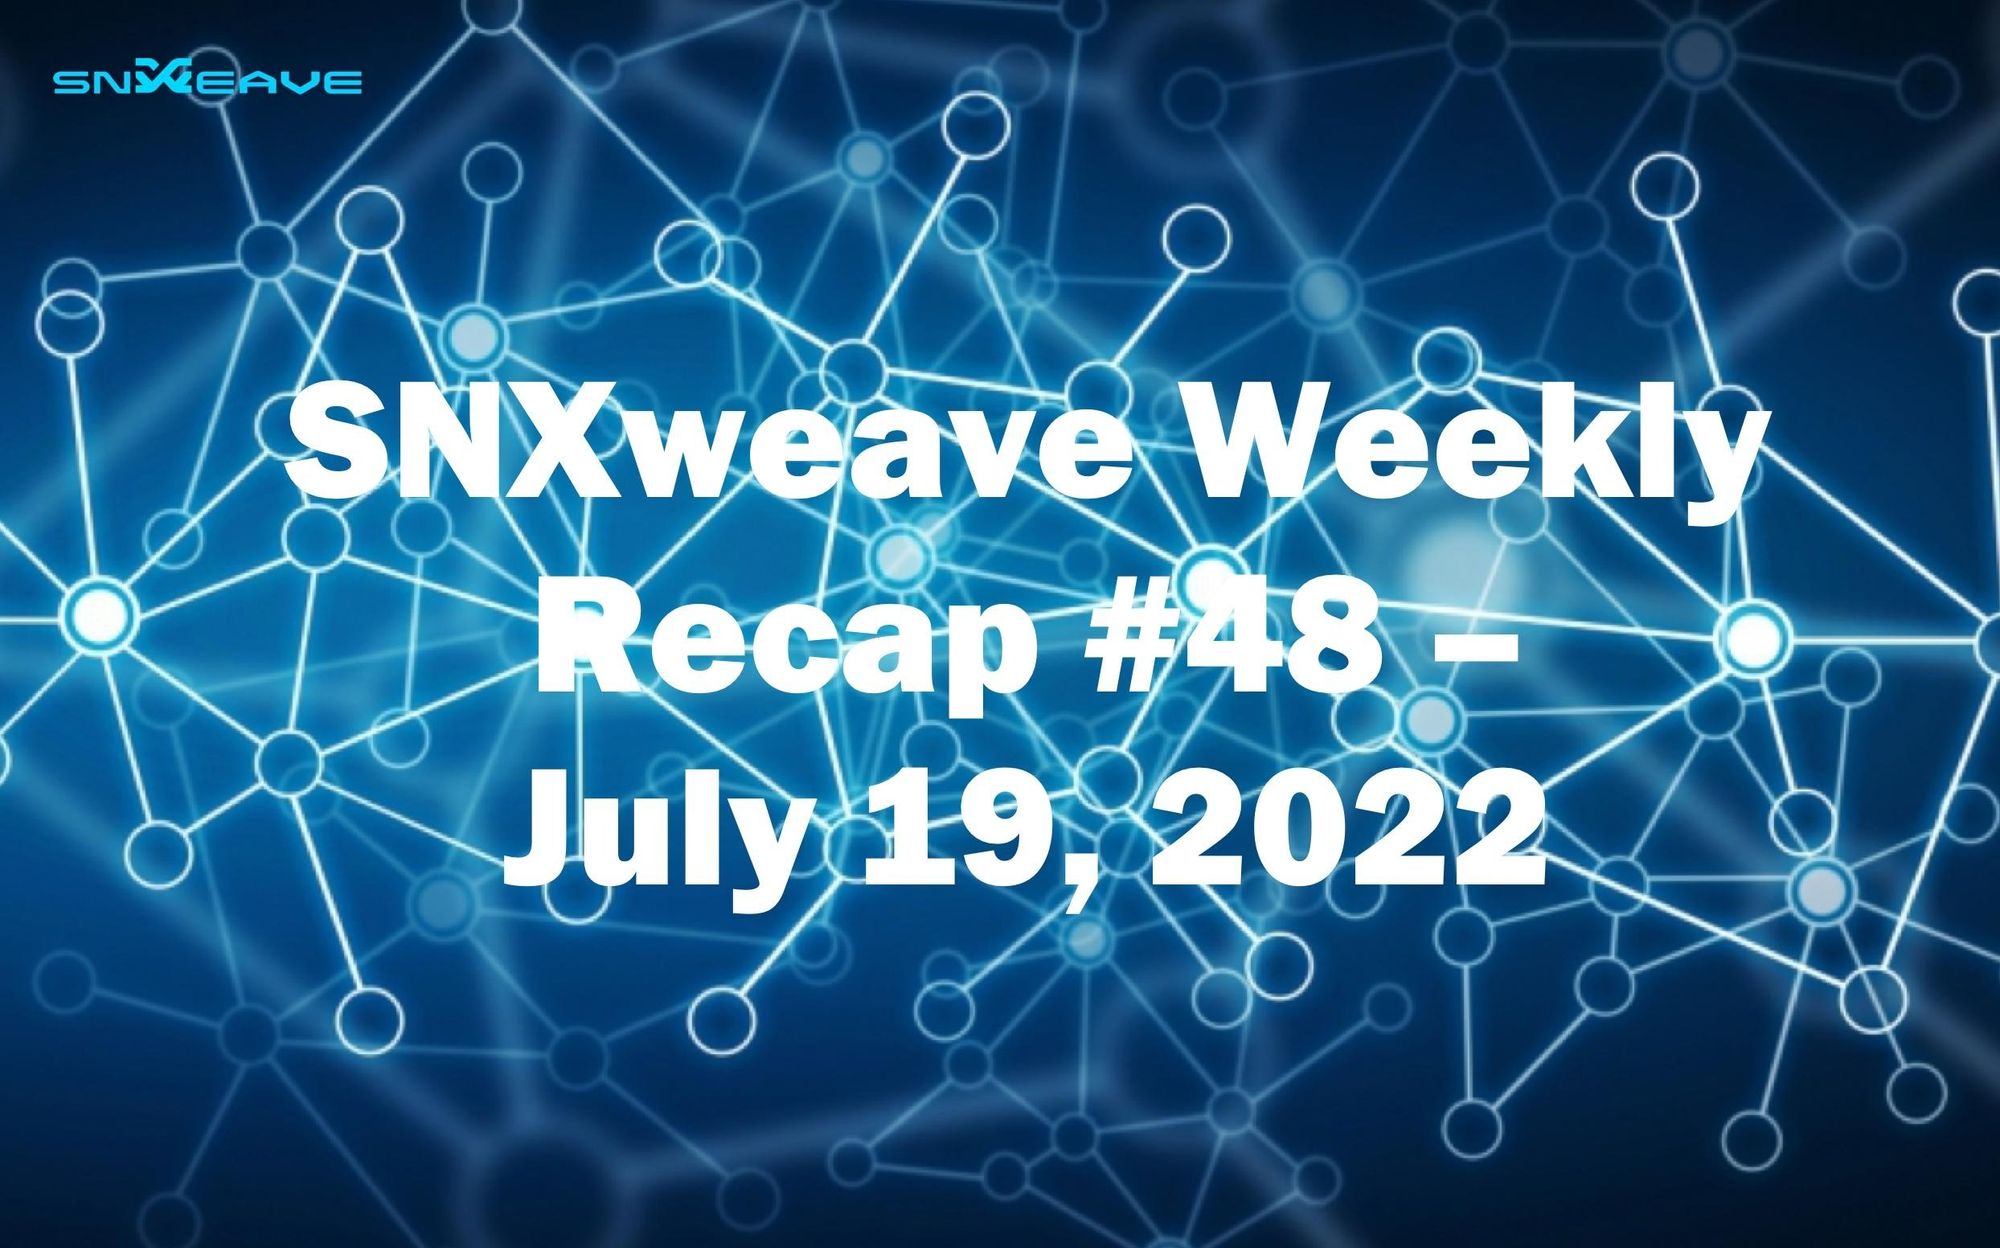 SNXweave Weekly Recap 48